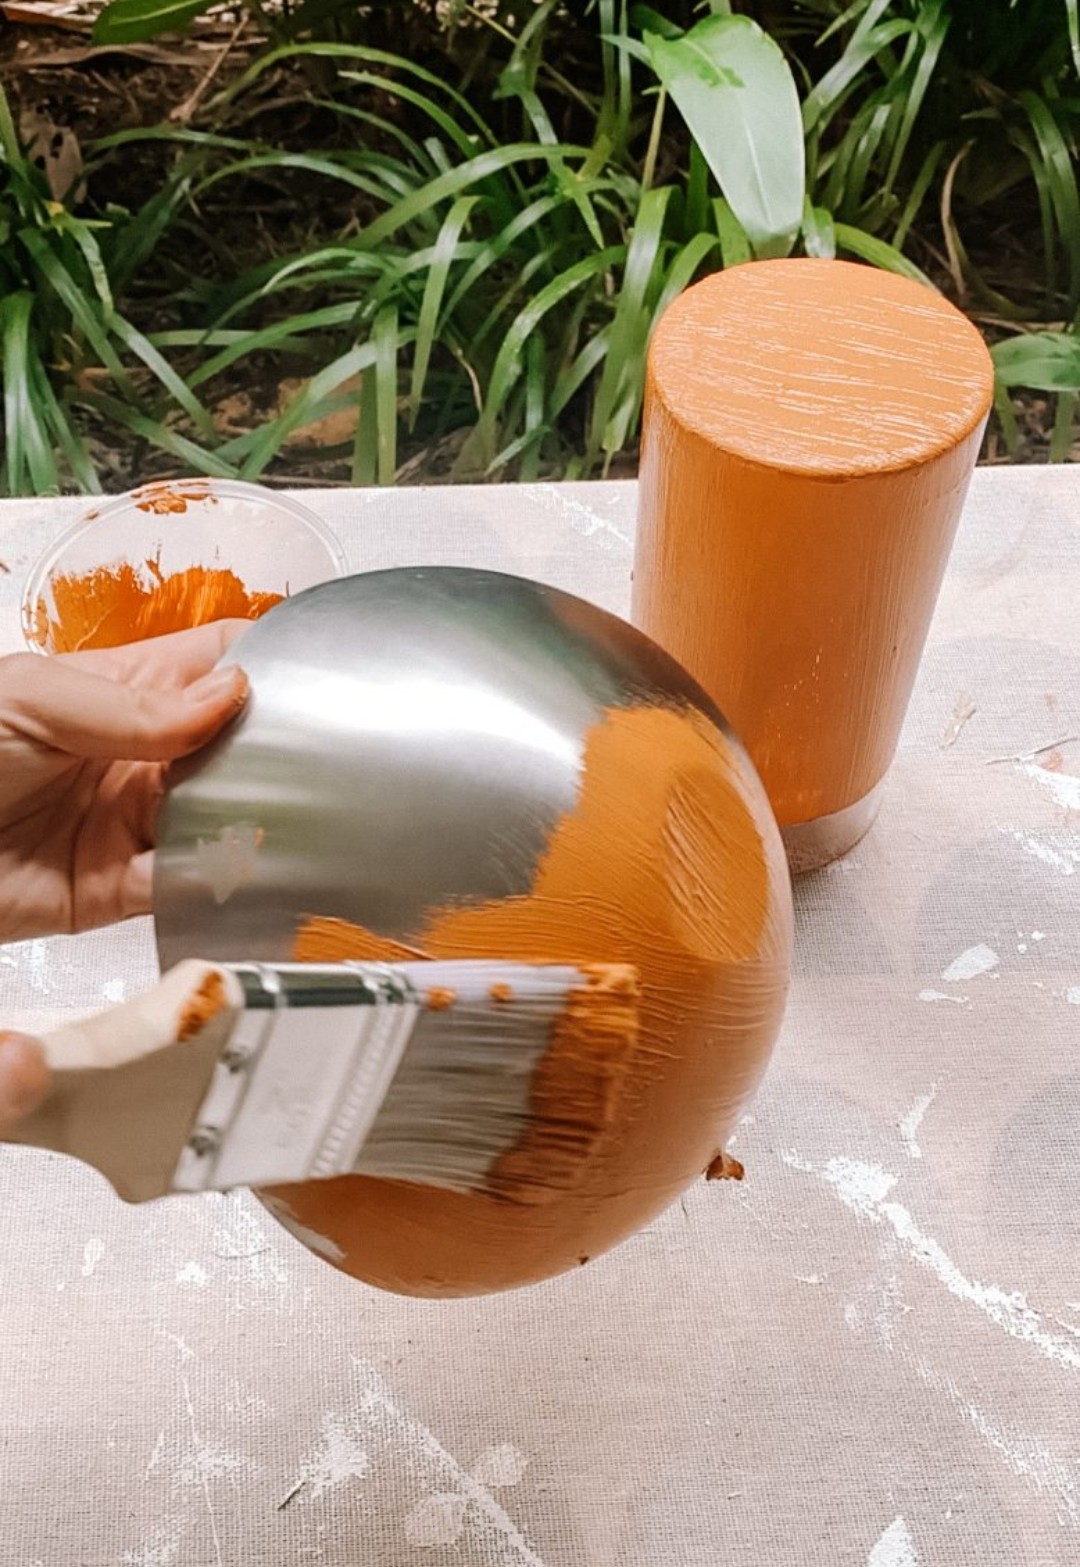 How to make a mushroom lamp